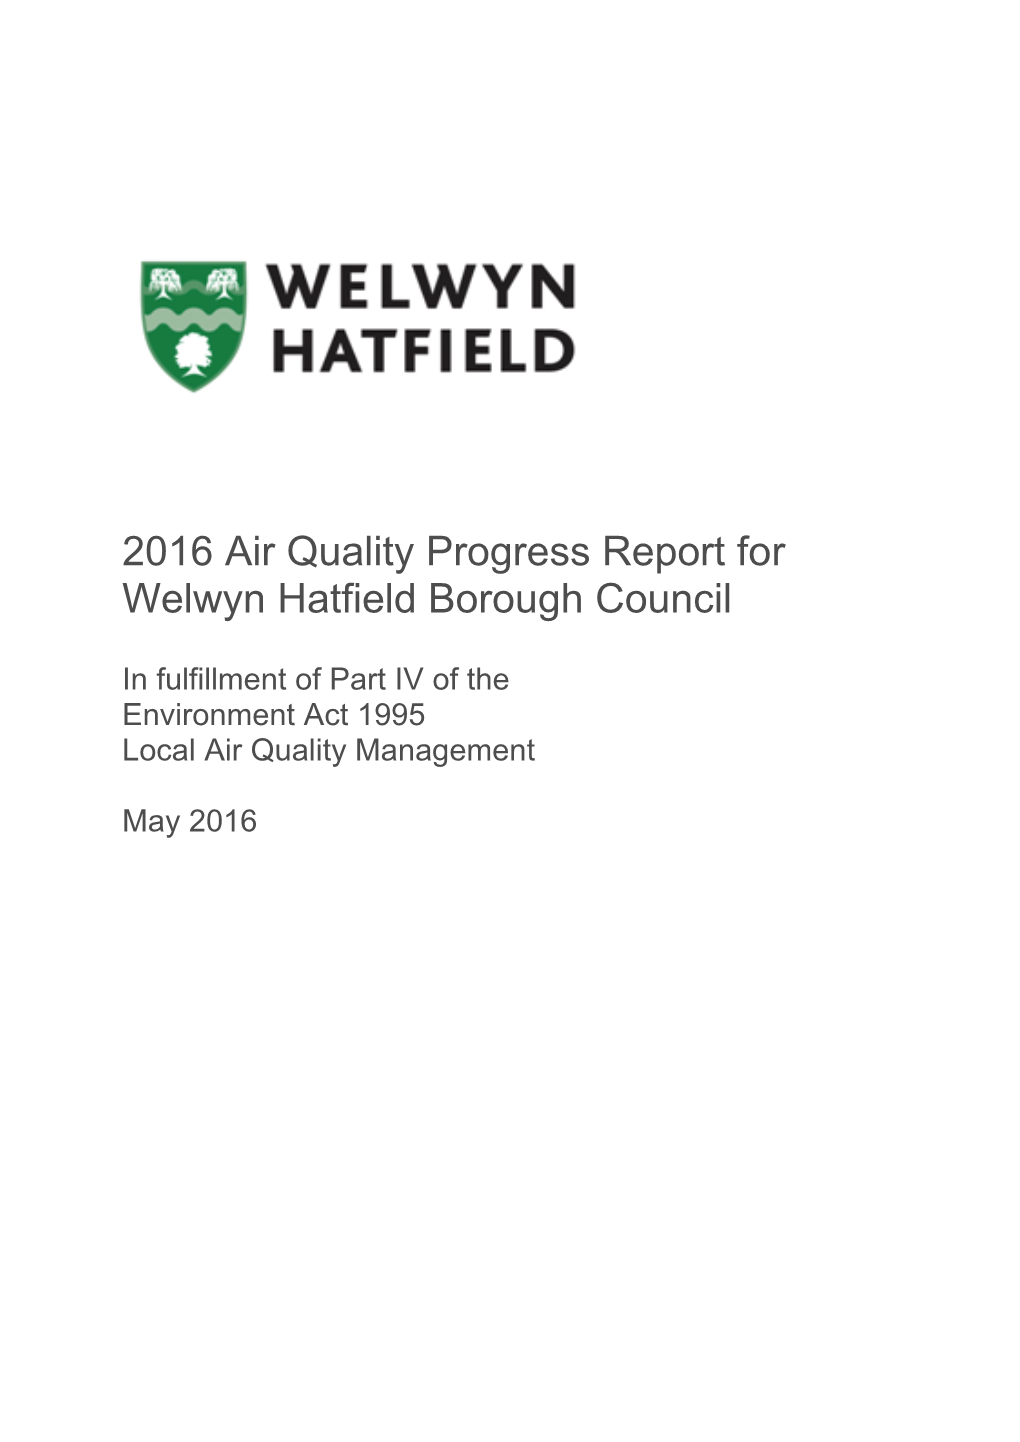 Air Quality Progress Report 2016